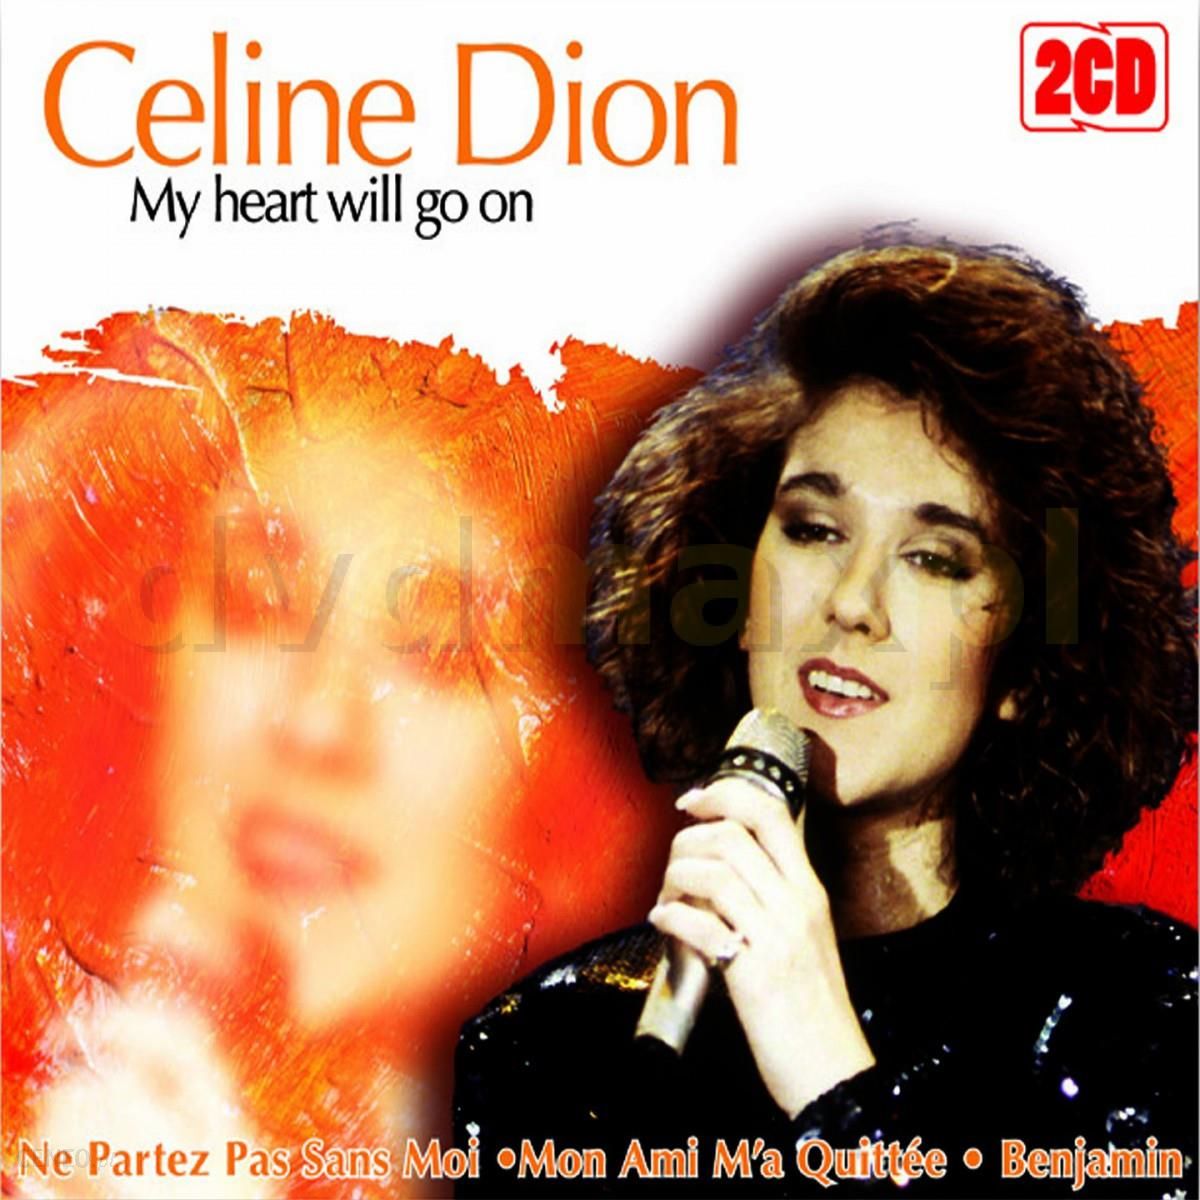 My Heart will go on Селин Дион. Celine Dion my Heart will go on обложка. Celine Dion my Heart will go on Cover. Celine Dion - my Heart will альбом. Гоу вей песня